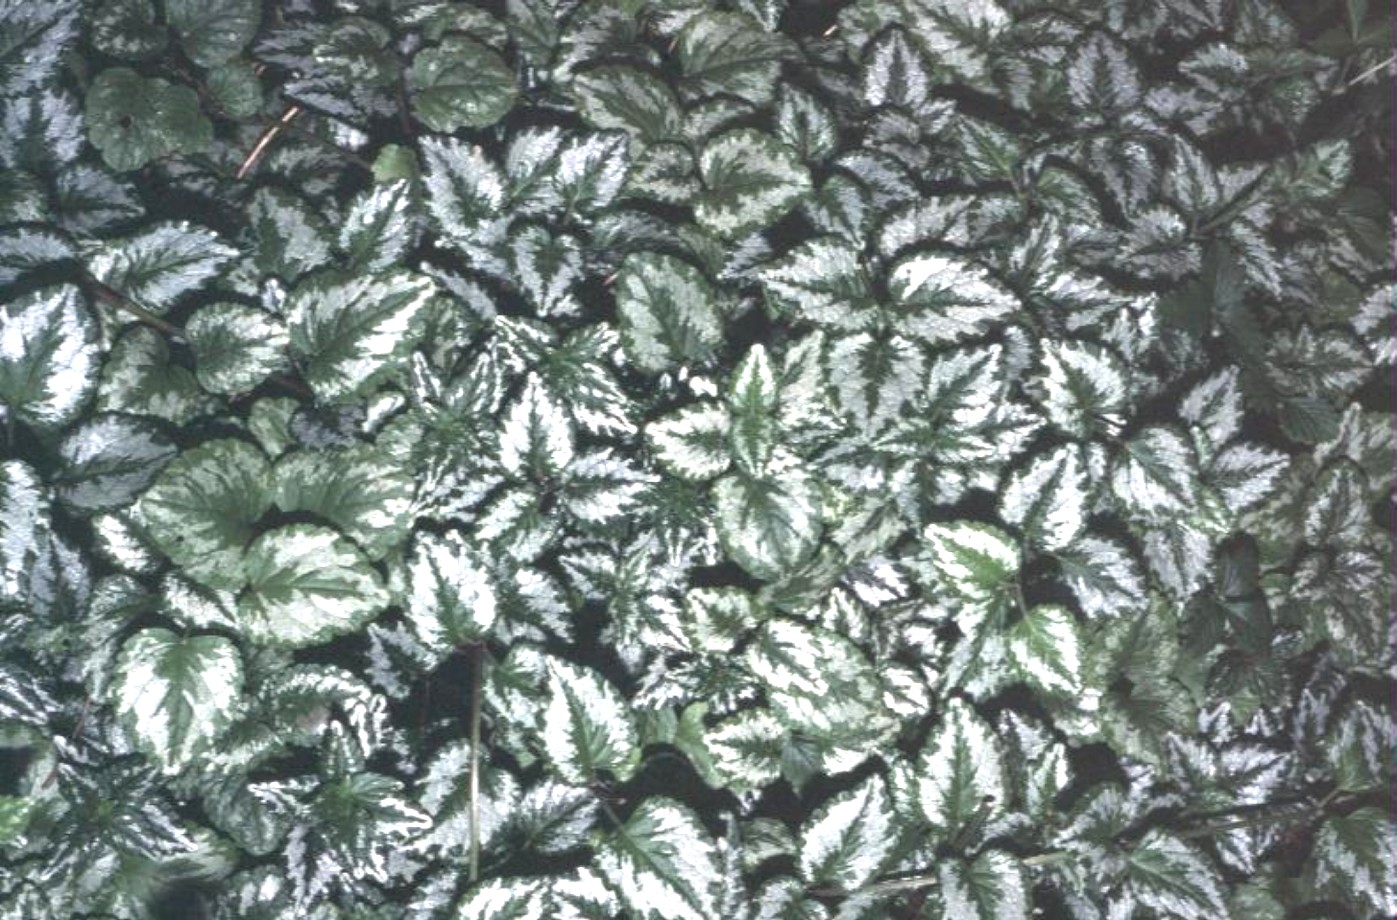 Lamium maculatum 'Variegatum'   / Variegated Spotted Nettle